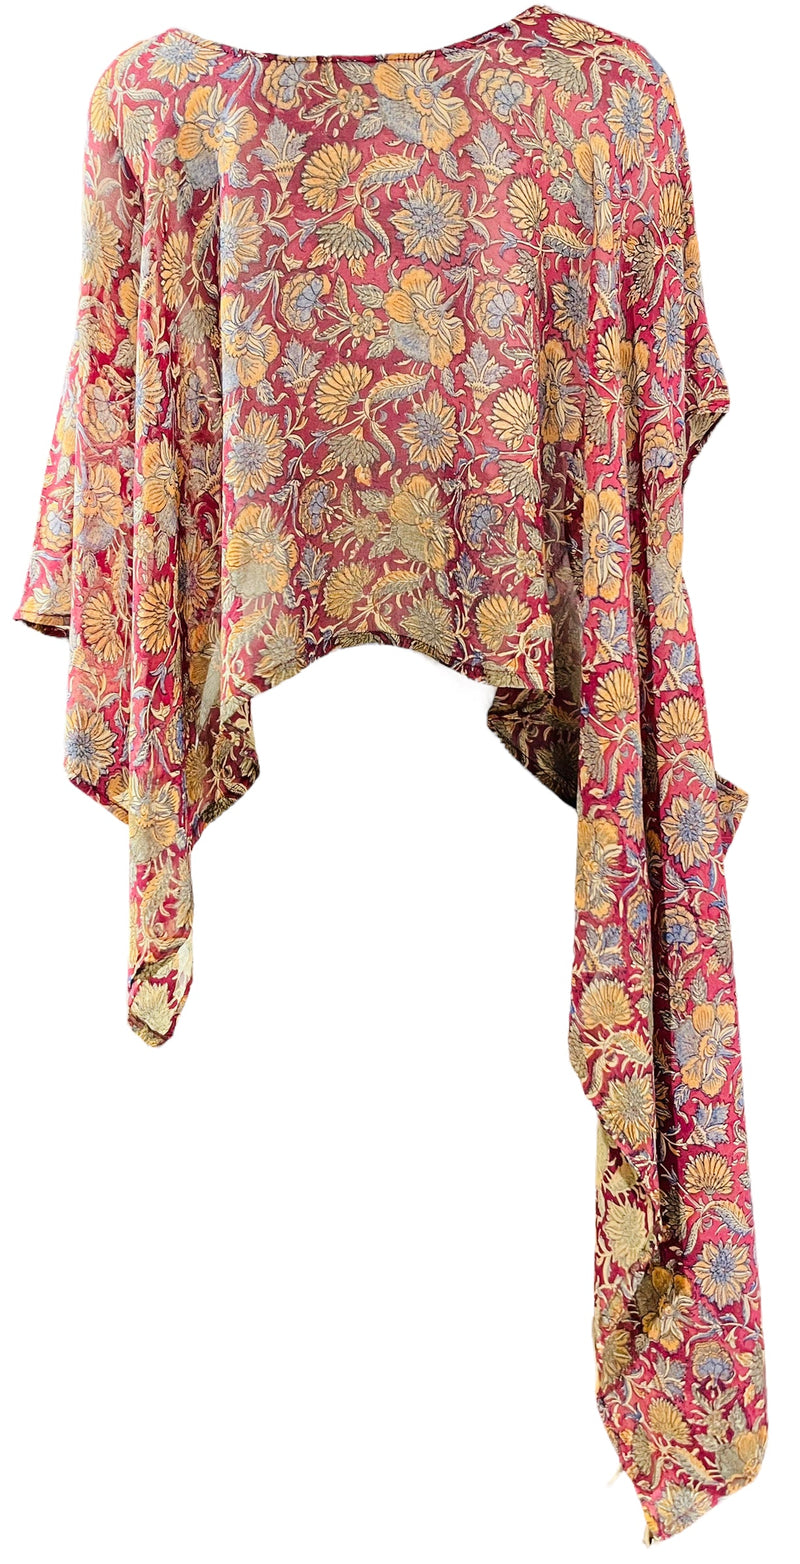 PRG2615 Selma Burke Sheer Pure Silk Versatile Vest